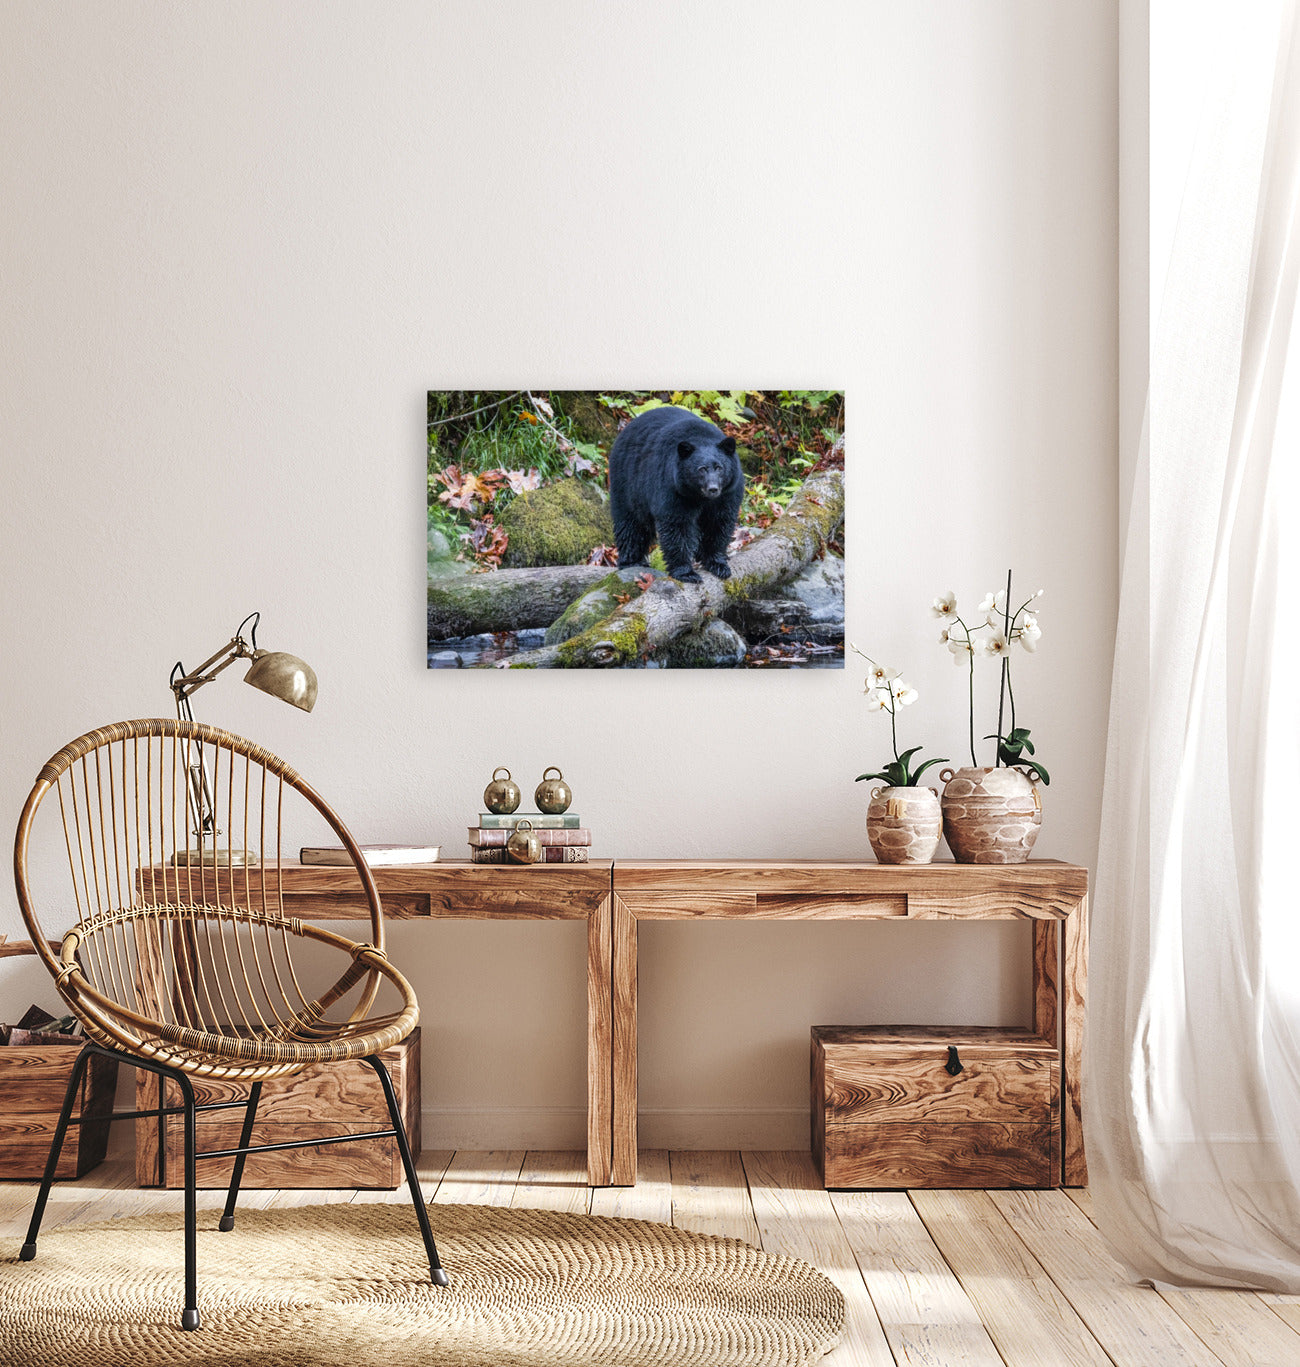 Black Bear on a Log 24x36"